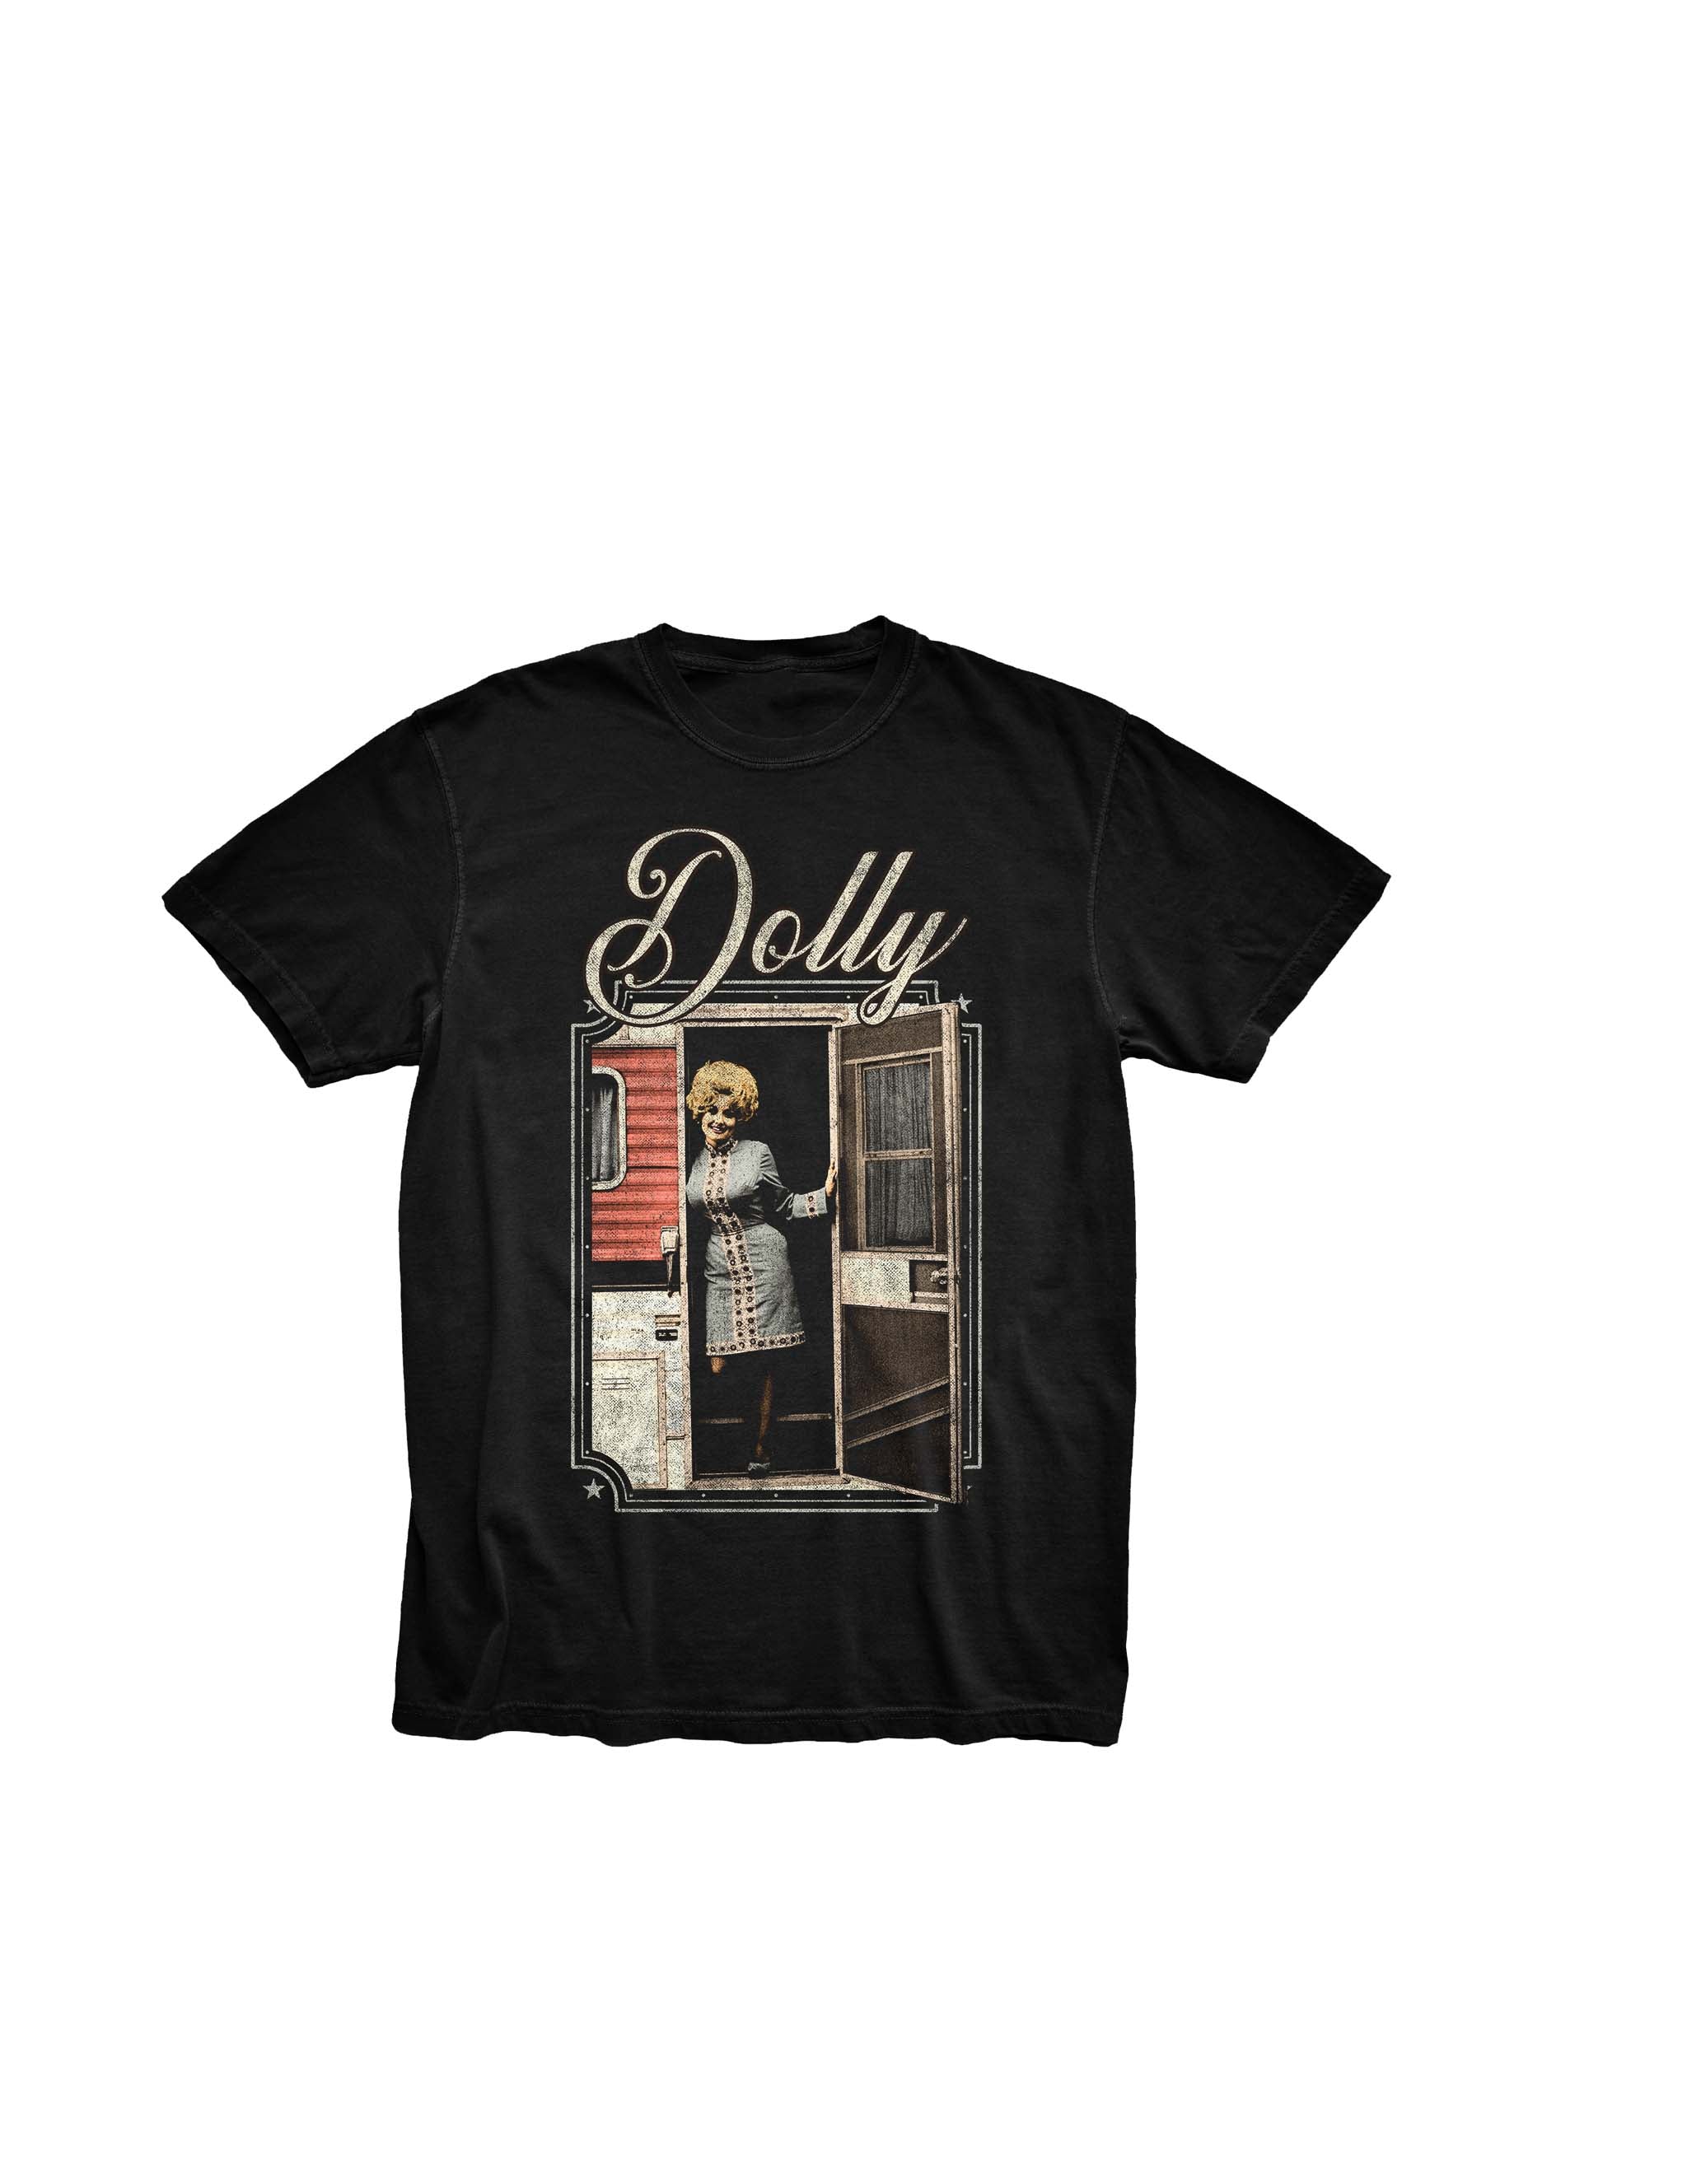 Dolly Parton Trailer T-Shirt